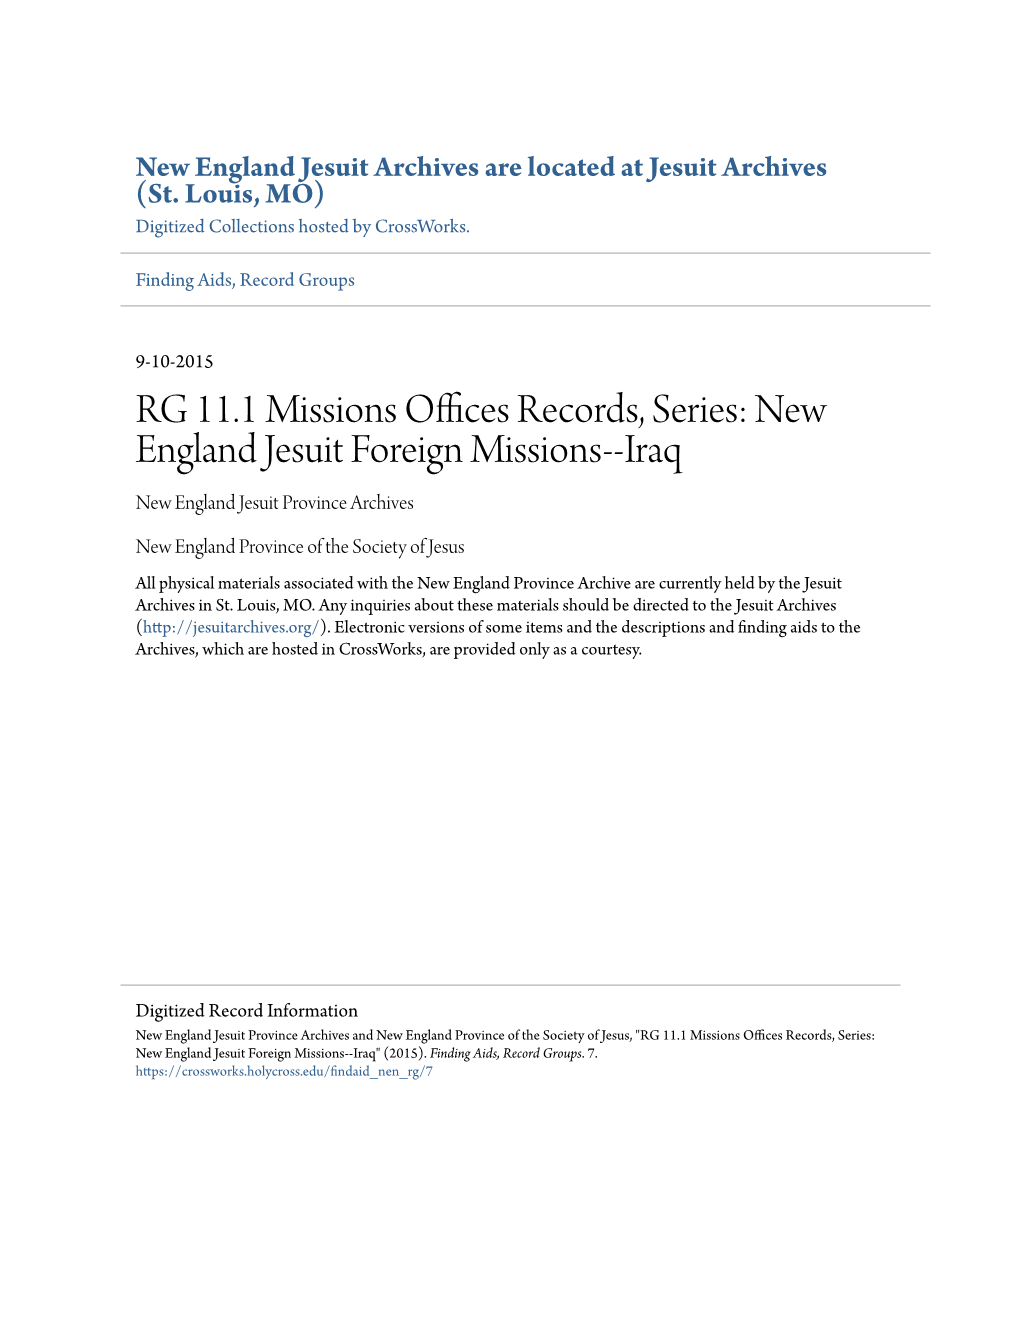 Iraq New England Jesuit Province Archives